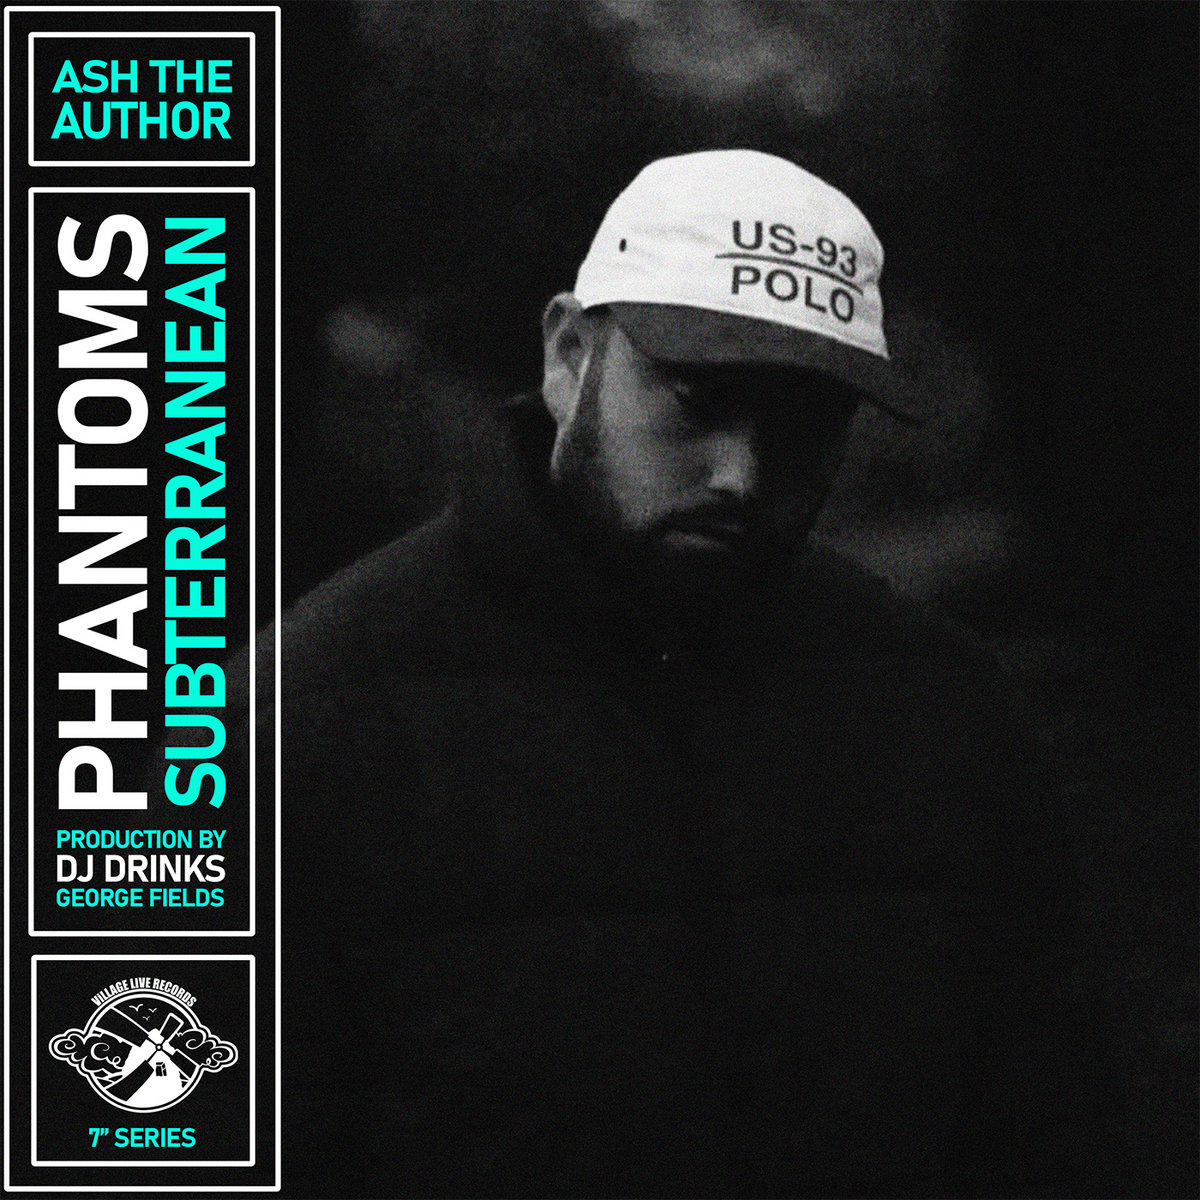 Phantoms__subterranean_ash_the_author